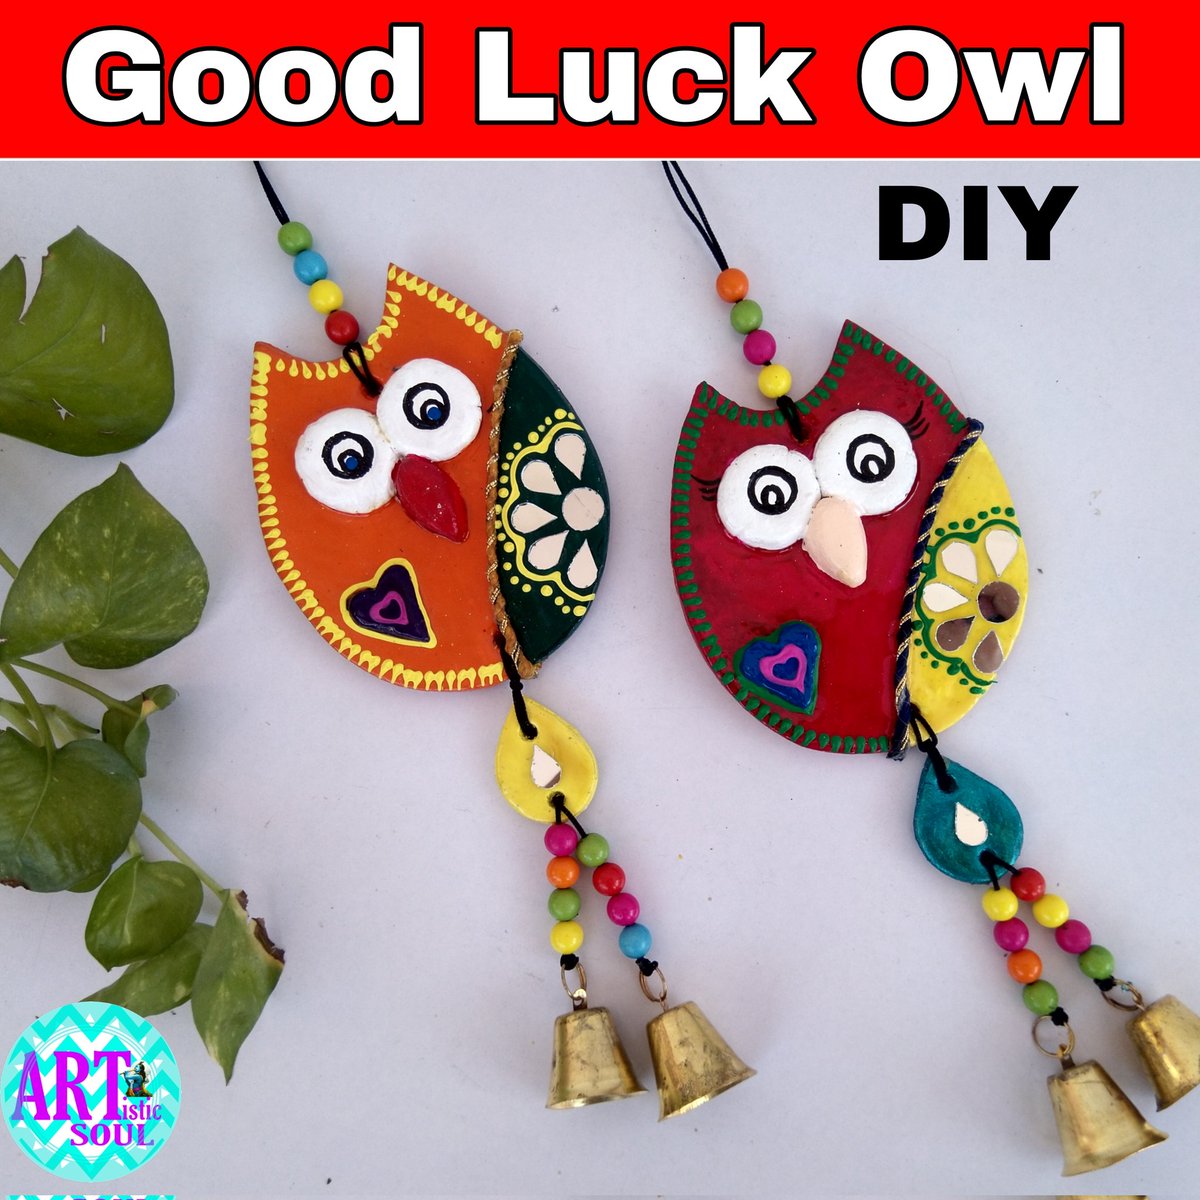 DIY- Good Luck Owl 🦉 youtu.be/itnd-3UrrQI
Homemade Wall hanging...try it !! 
.
#crafts #craft #diy #craftlover #artlover #MothersDay #handicraft  #handmadegift #Owl #GoodLuck #youtubecreator #craftchannel #handmadegift